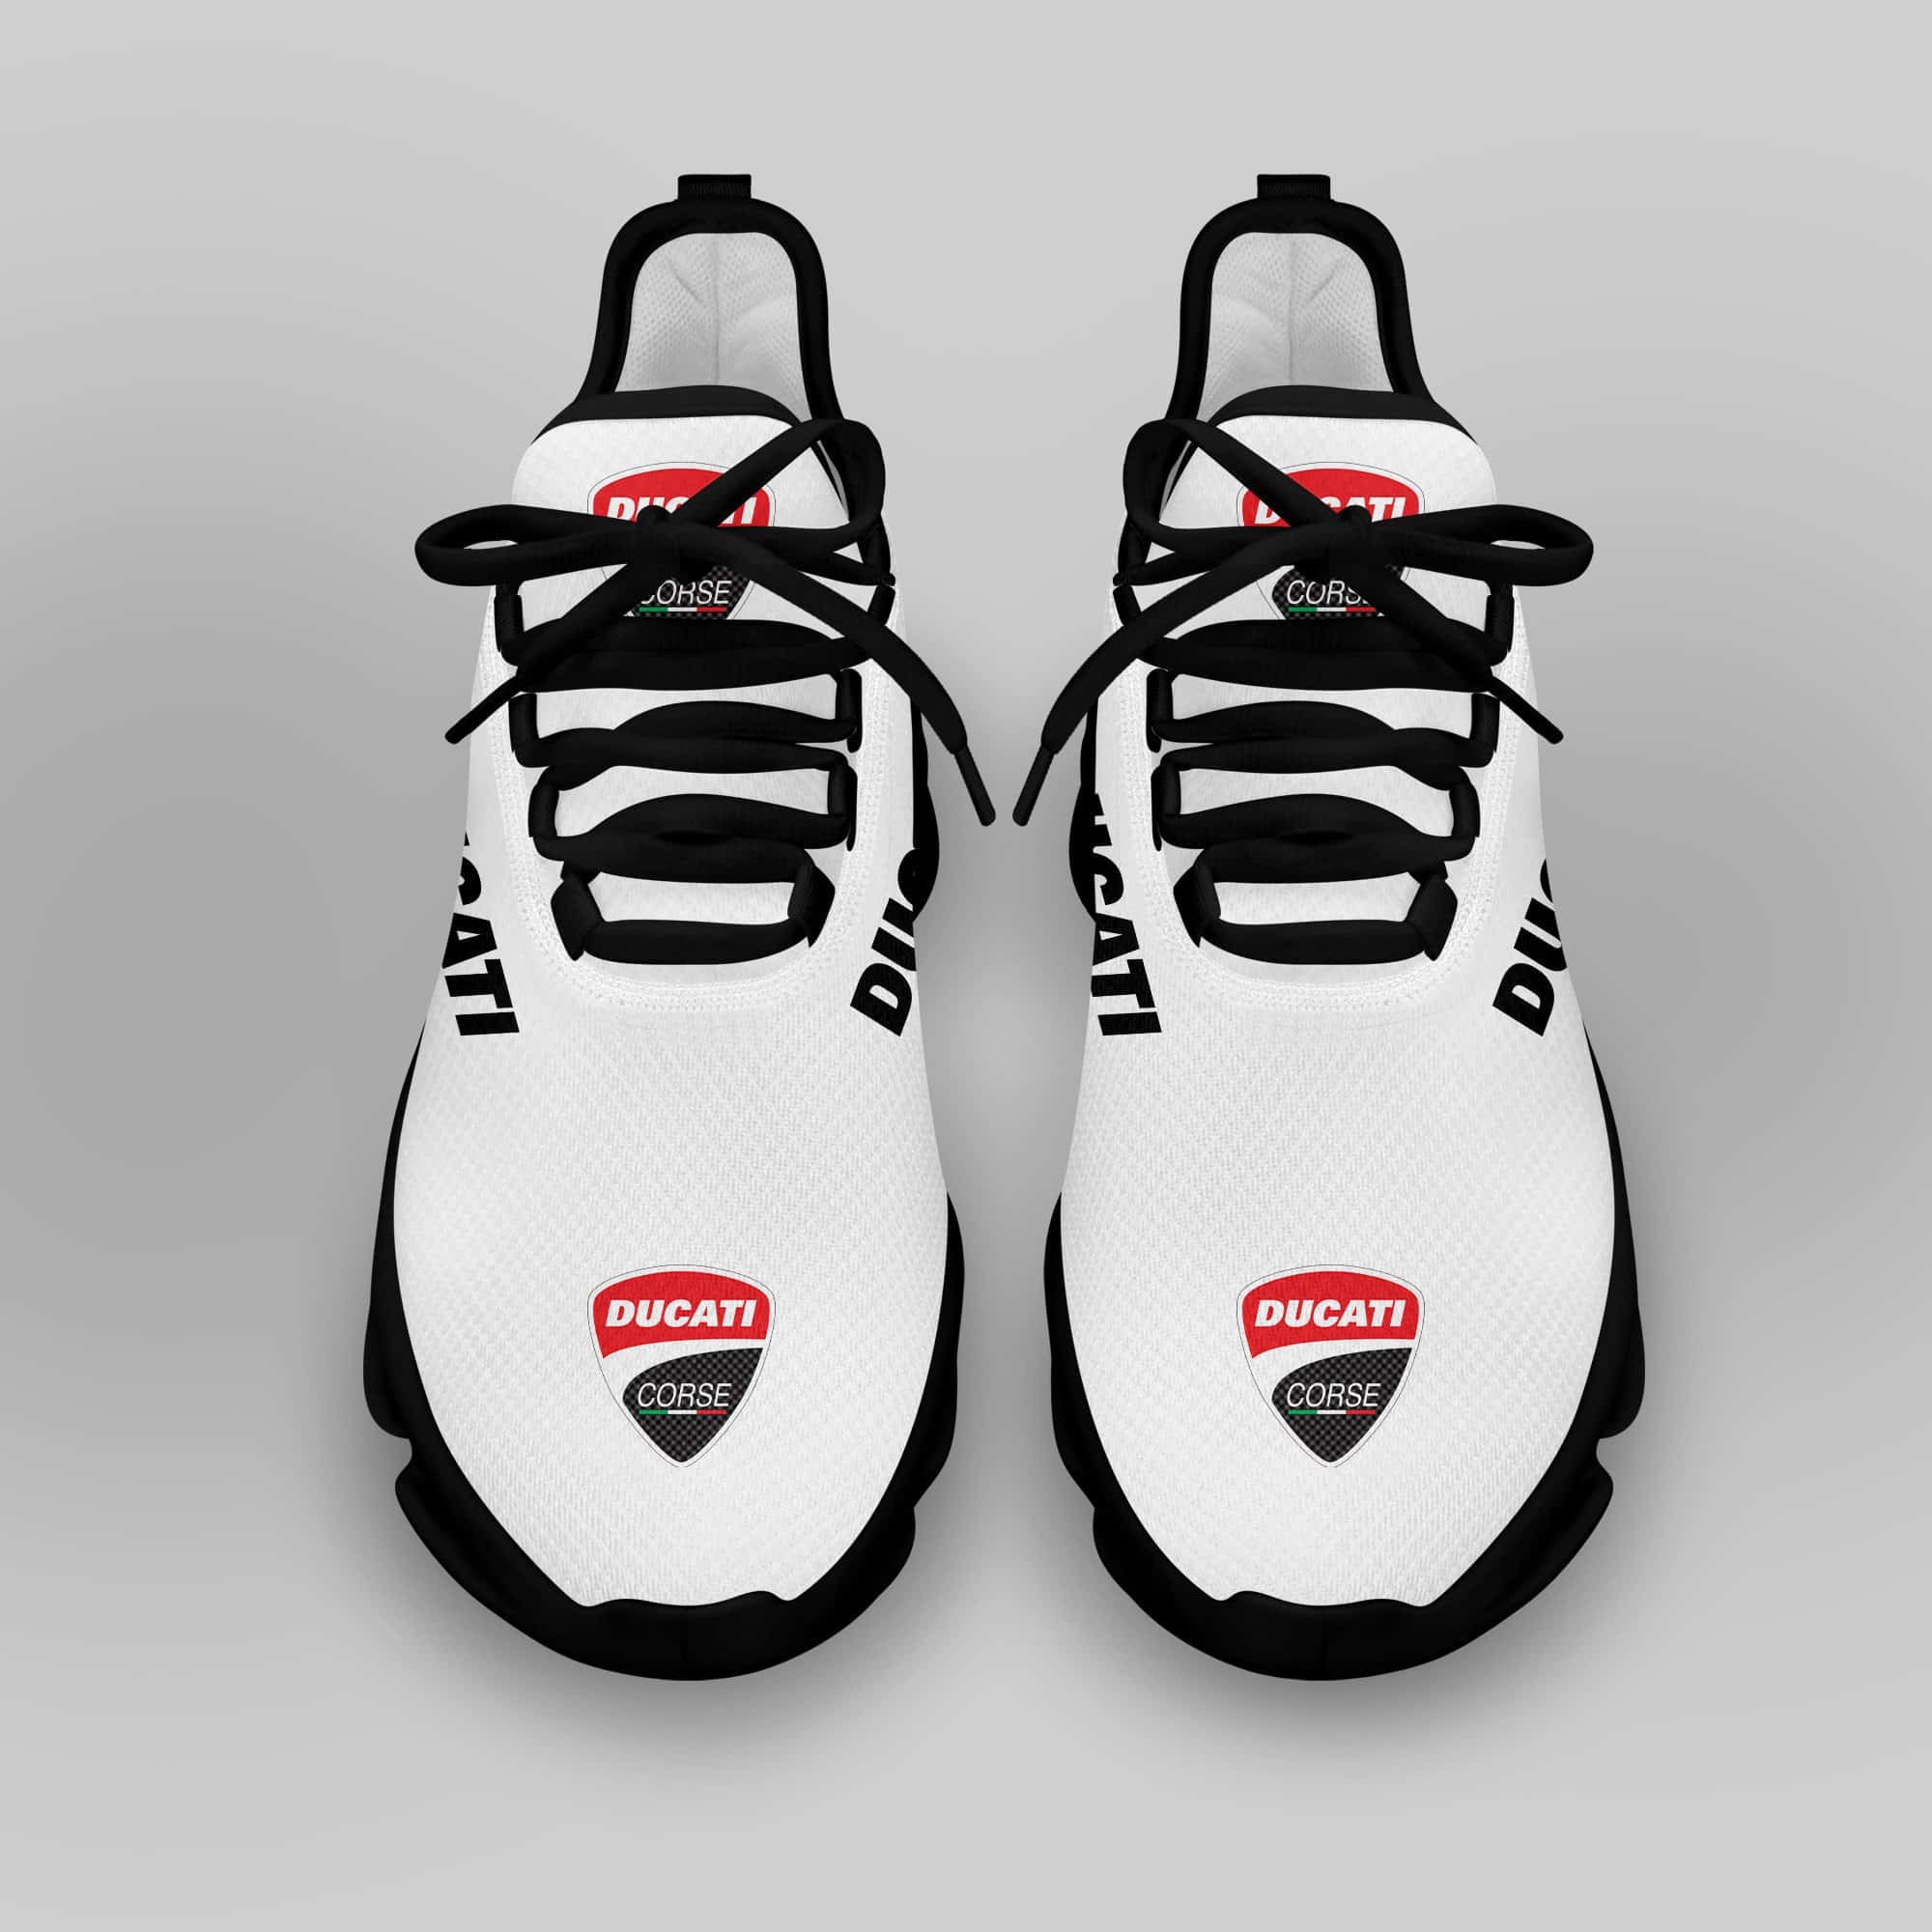 Ducati Racing Running Shoes Max Soul Shoes Sneakers Ver 27 4